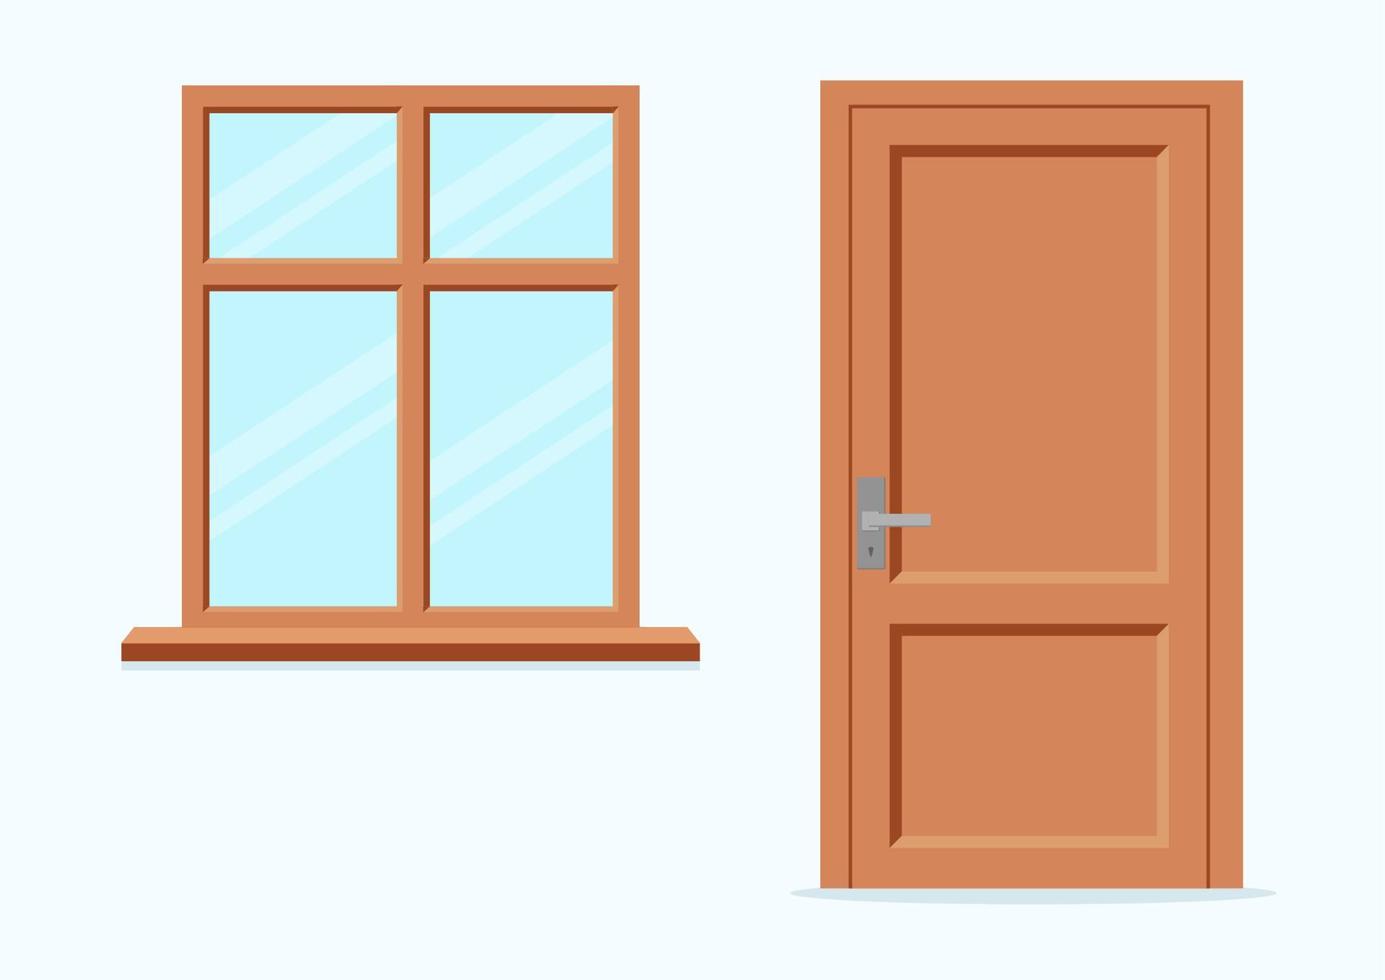 Fenster und Tür. flache Cartoon-Stil-Vektor-Illustration. vektor